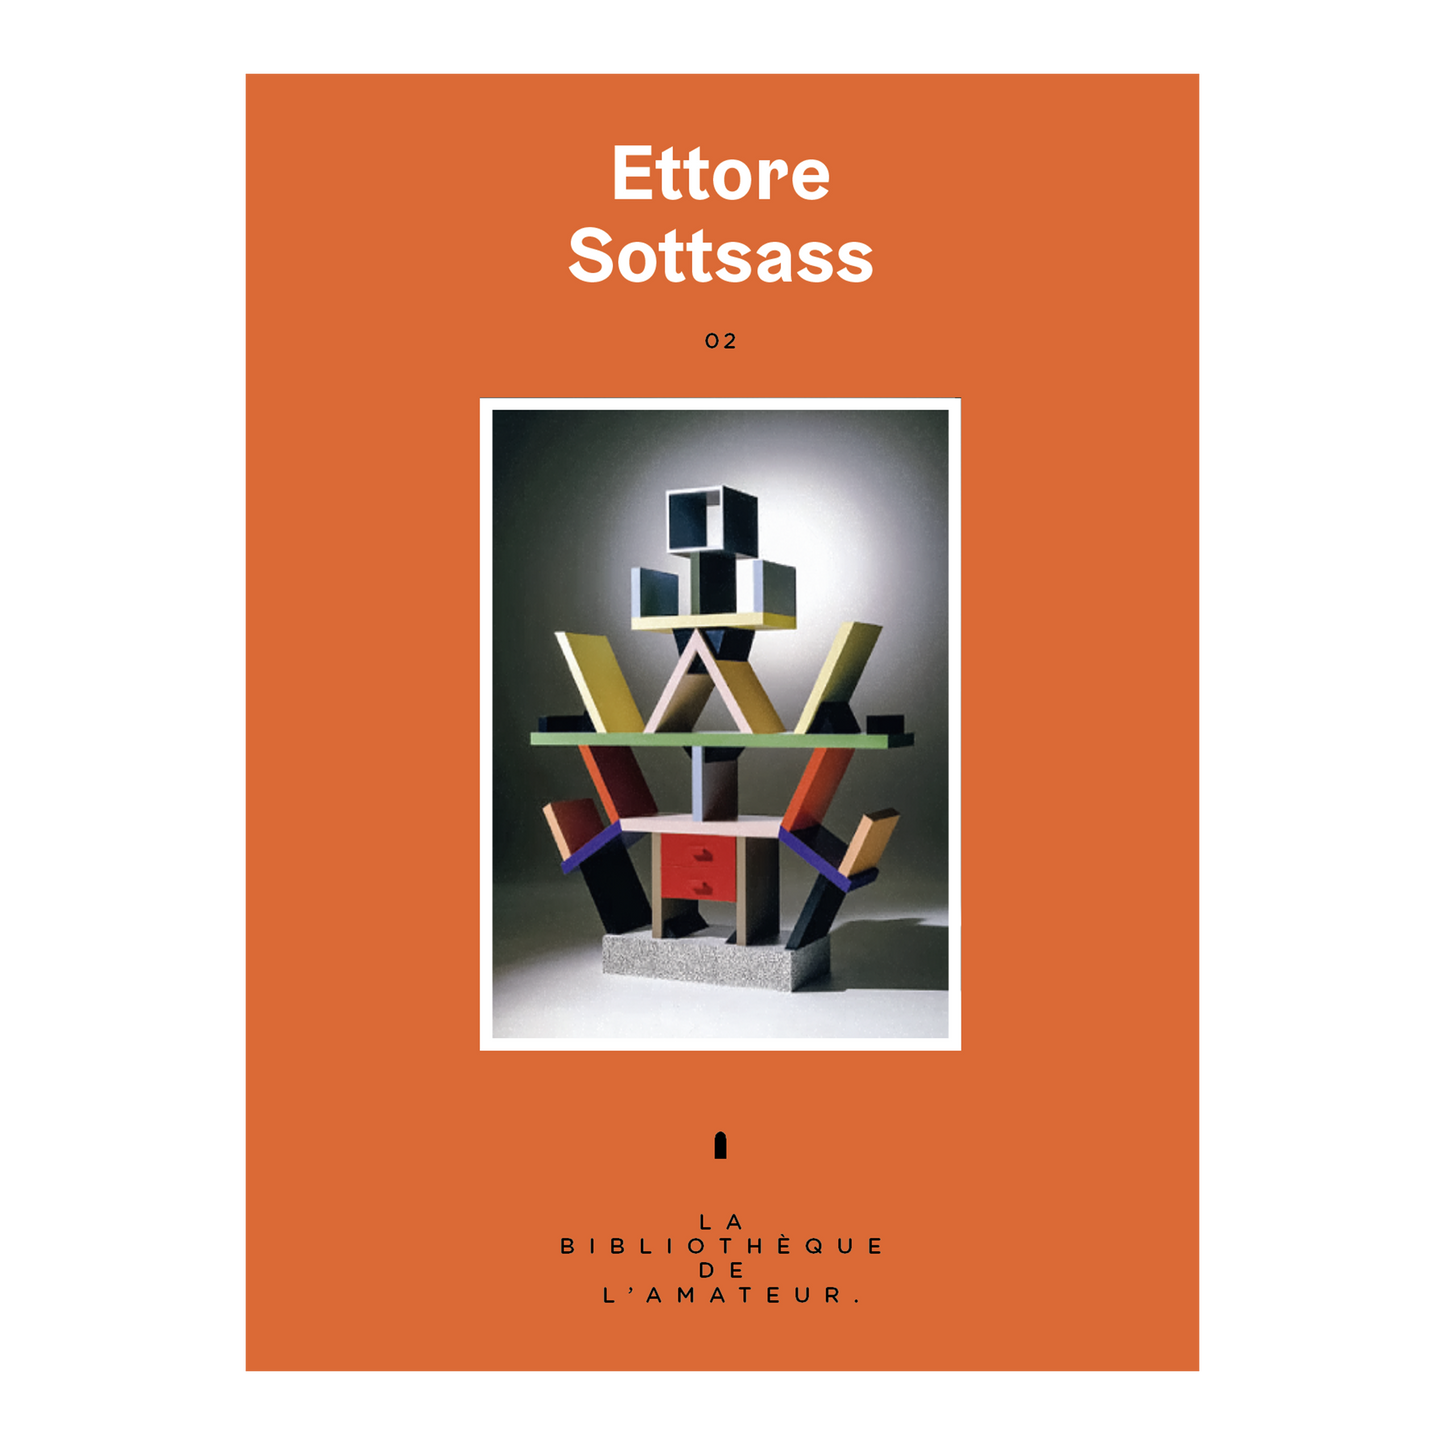 Ettore Sottsass